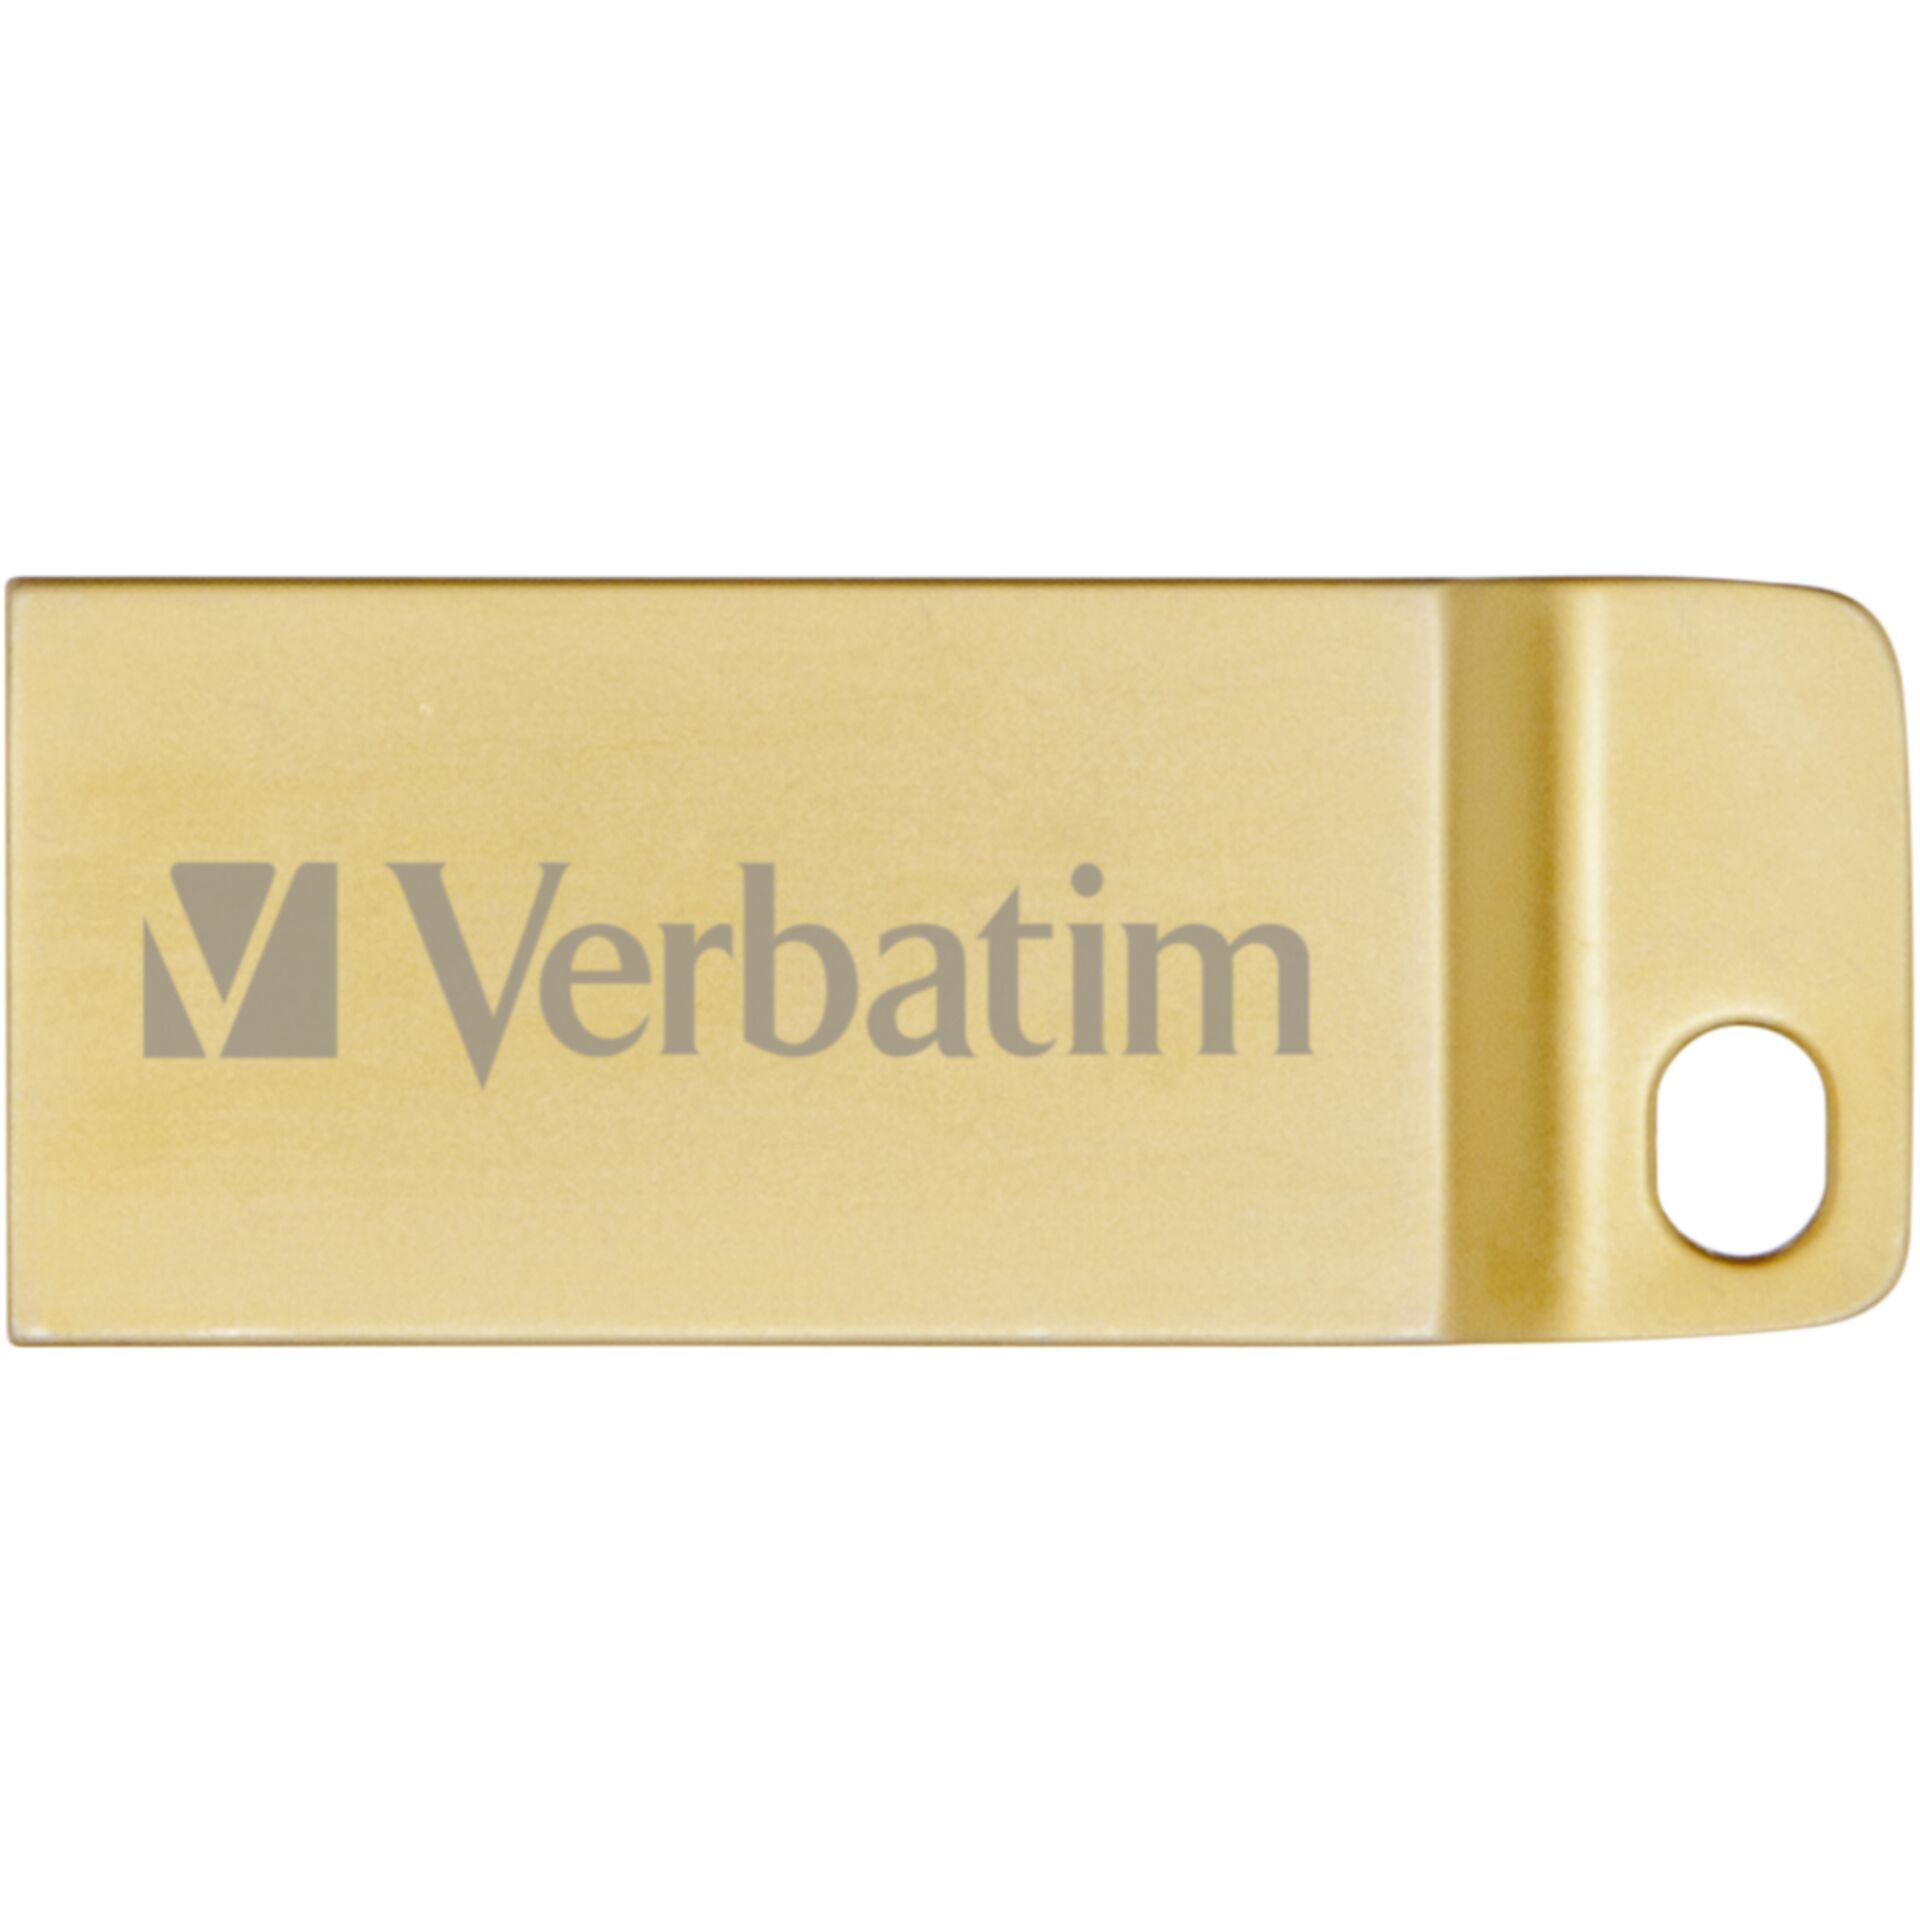 32 GB Verbatim Metal Executive gold USB-Stick, USB-A 3.0 